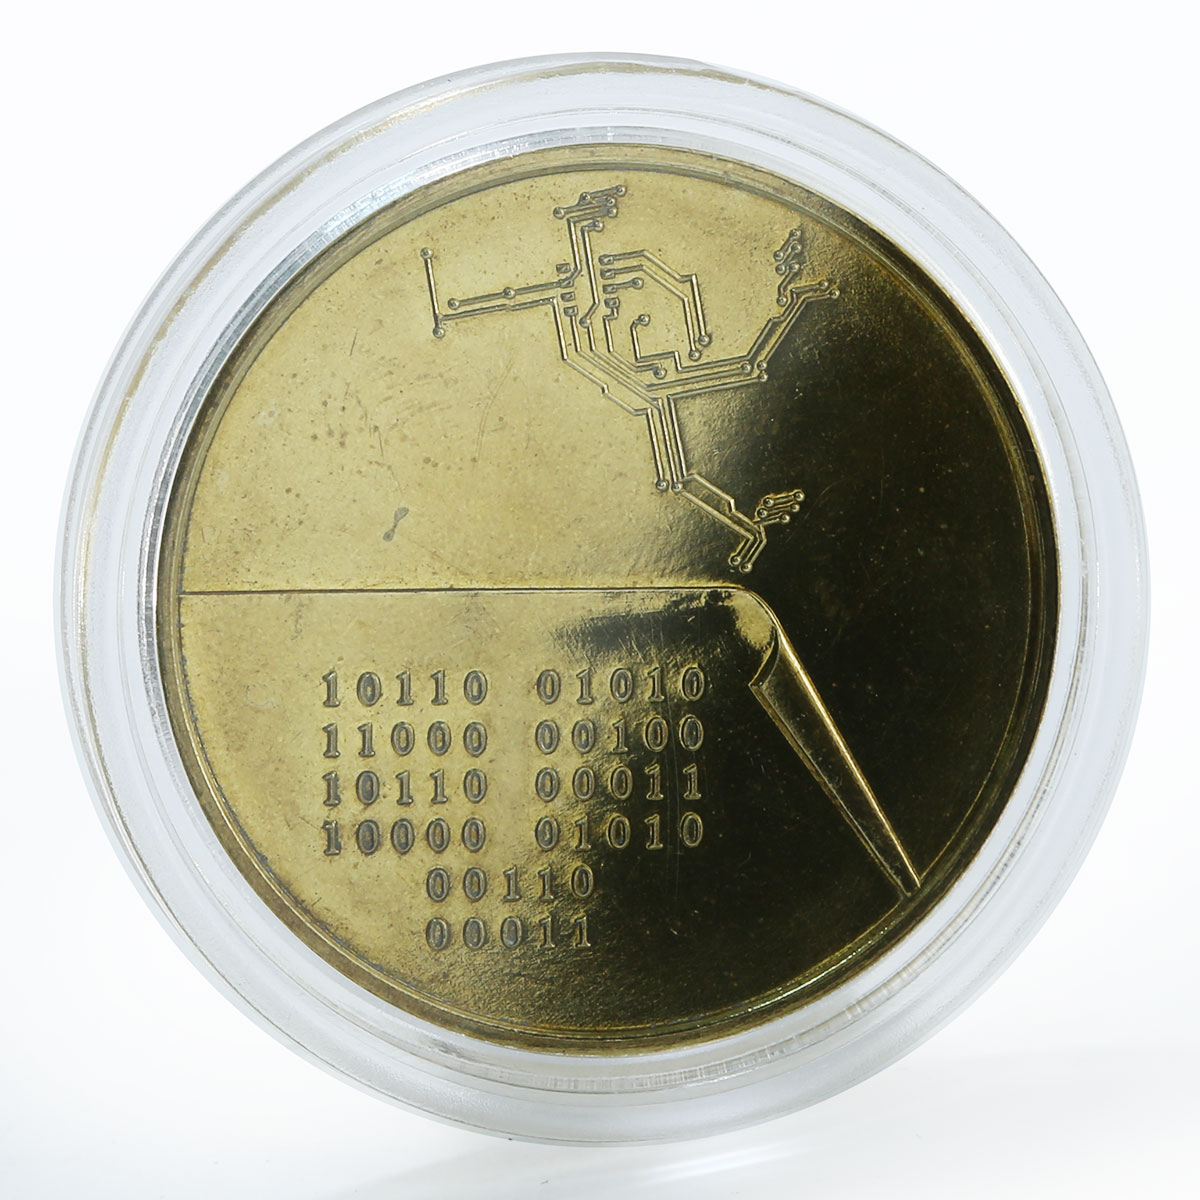 Hungary 1000 Forint Message - Mercury bronze coin 2002